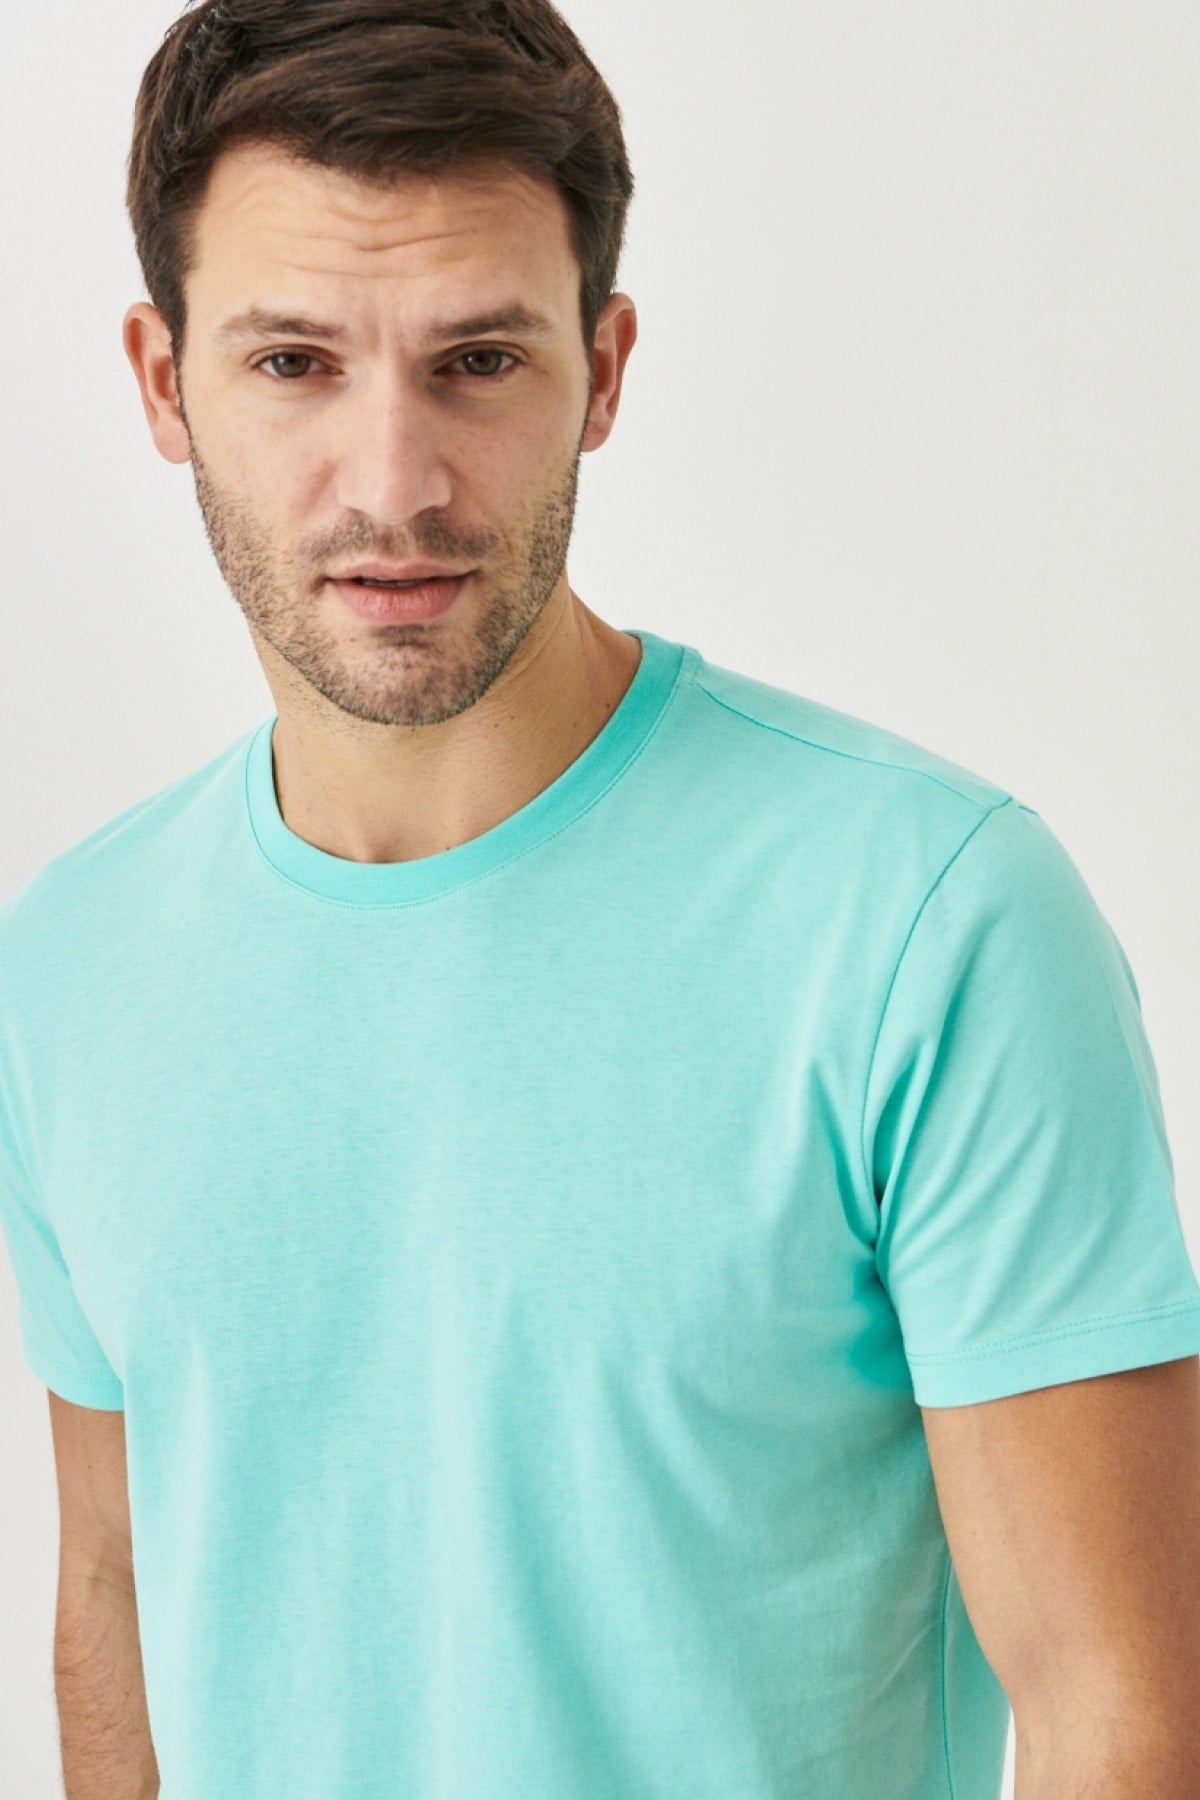 Men's Turquoise 100% Cotton Slim Fit Slim Fit Crew Neck Short Sleeved T-Shirt